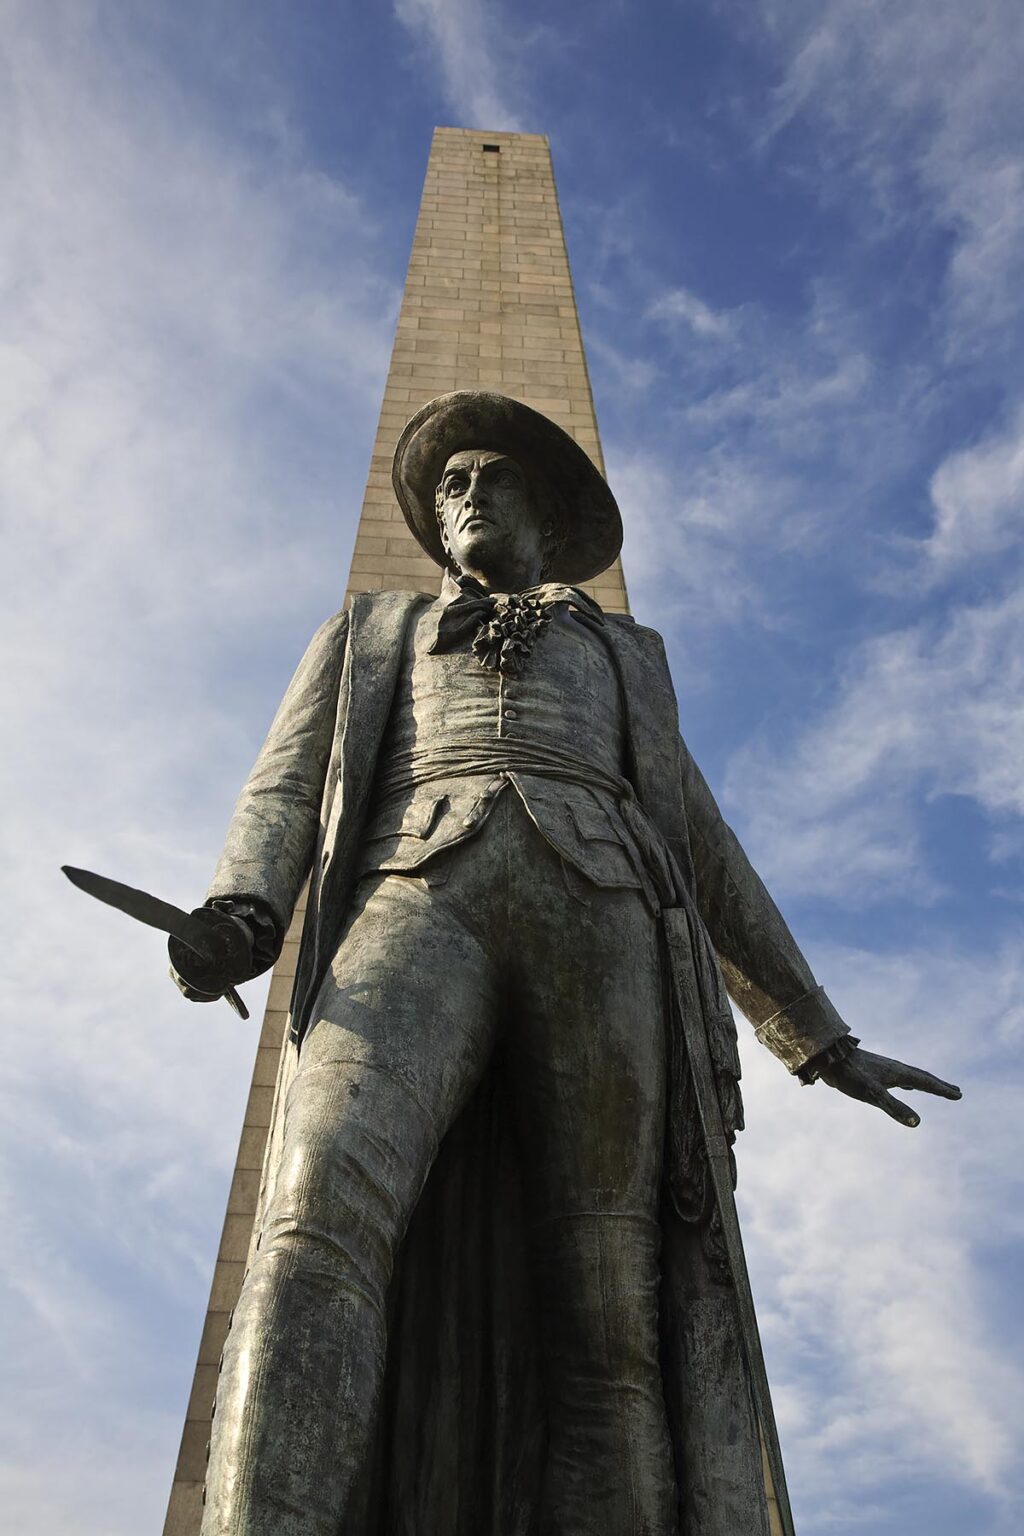 Statue of COLONEL WILLIAM PRESSCOTT and the GRANITE OBELISK at the BUNKER HILL MONUMENT located on Breed's Hill - BOSTON, MASSACHUSETTS